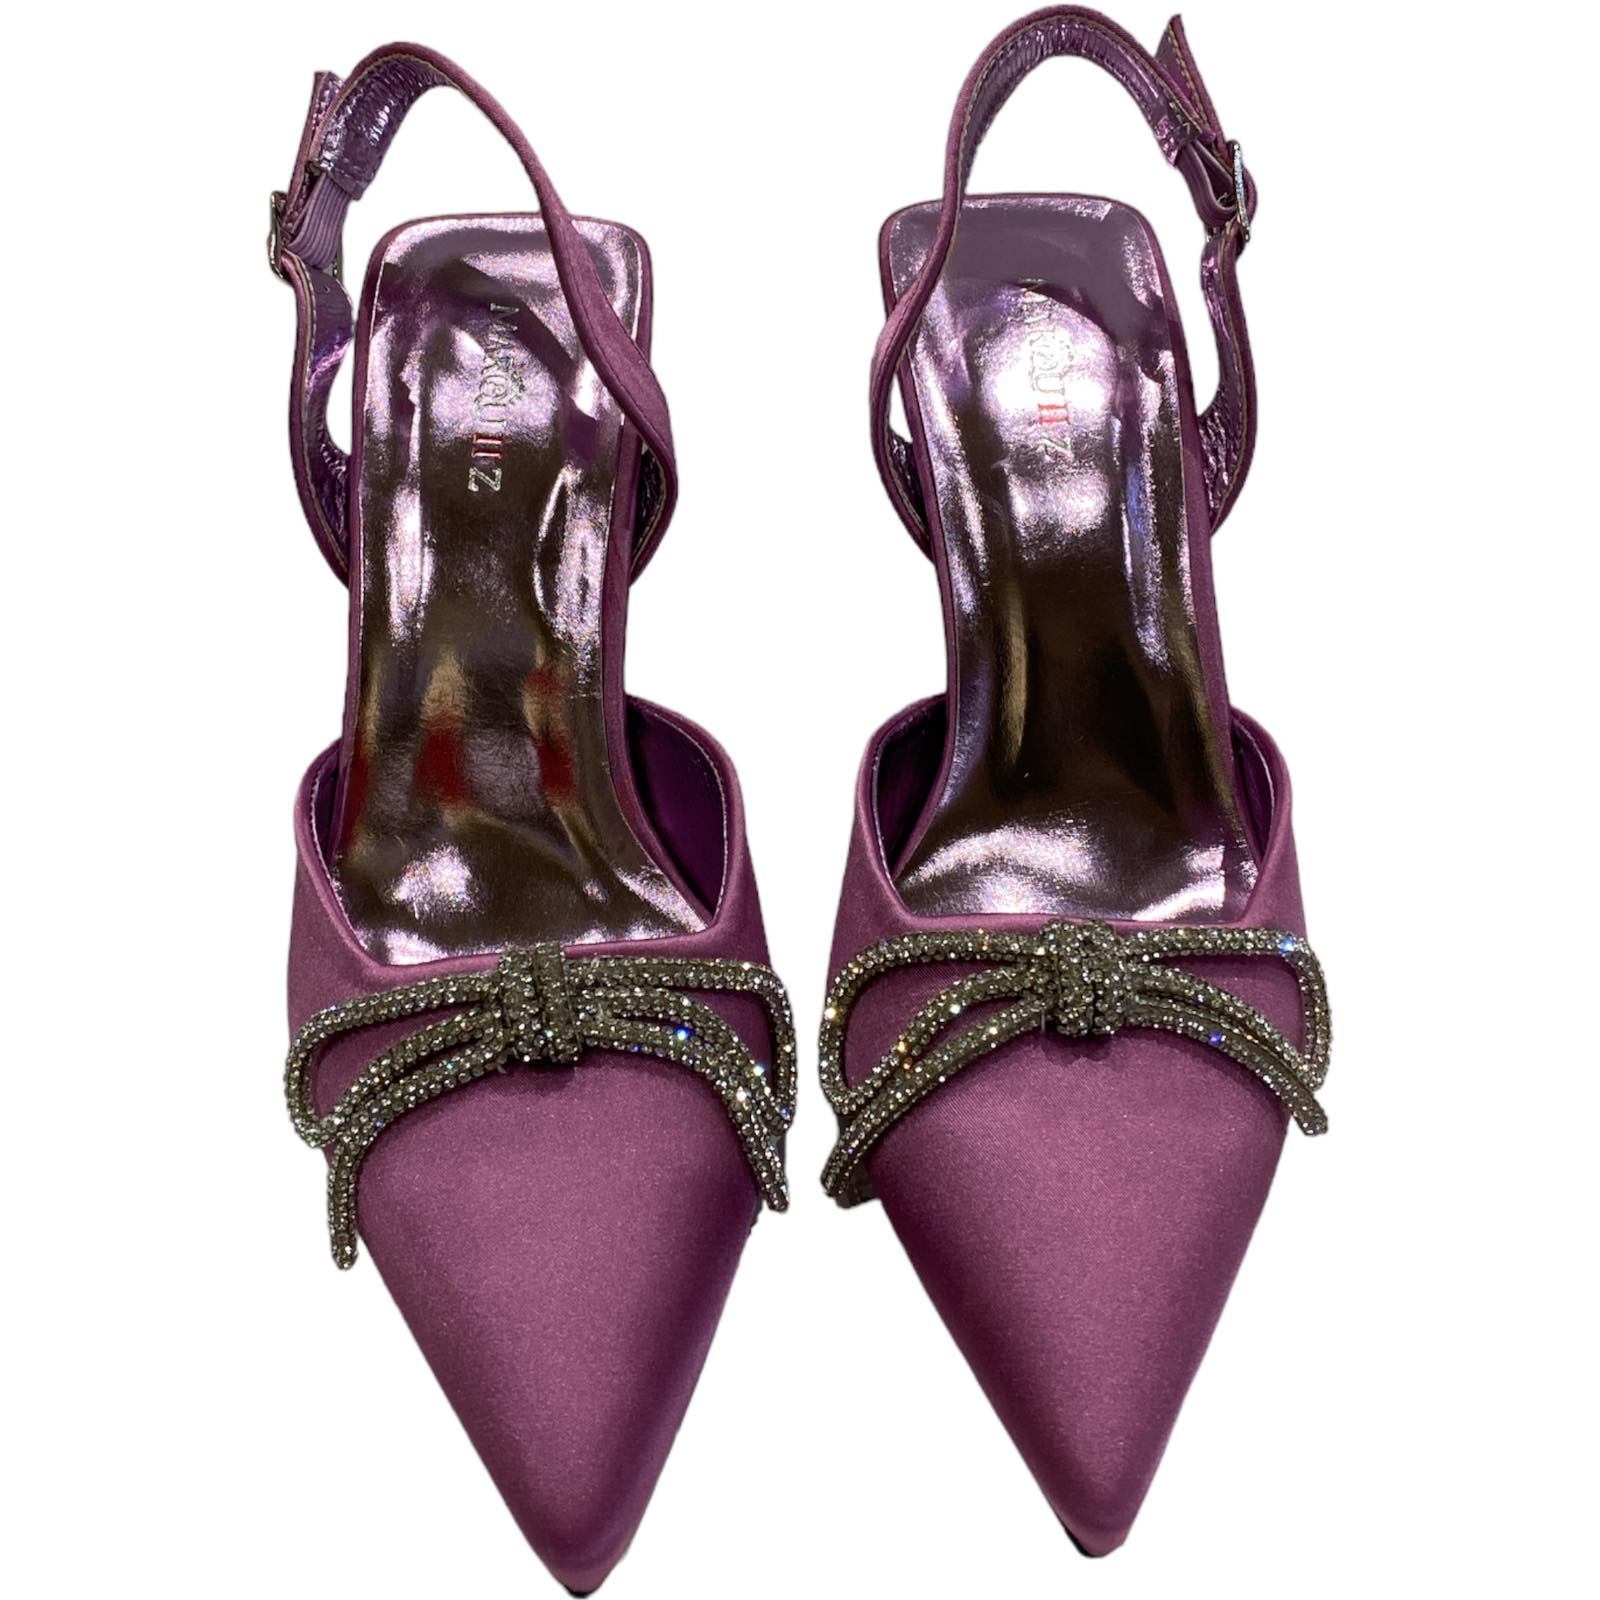 Lilac elegant bow shoes